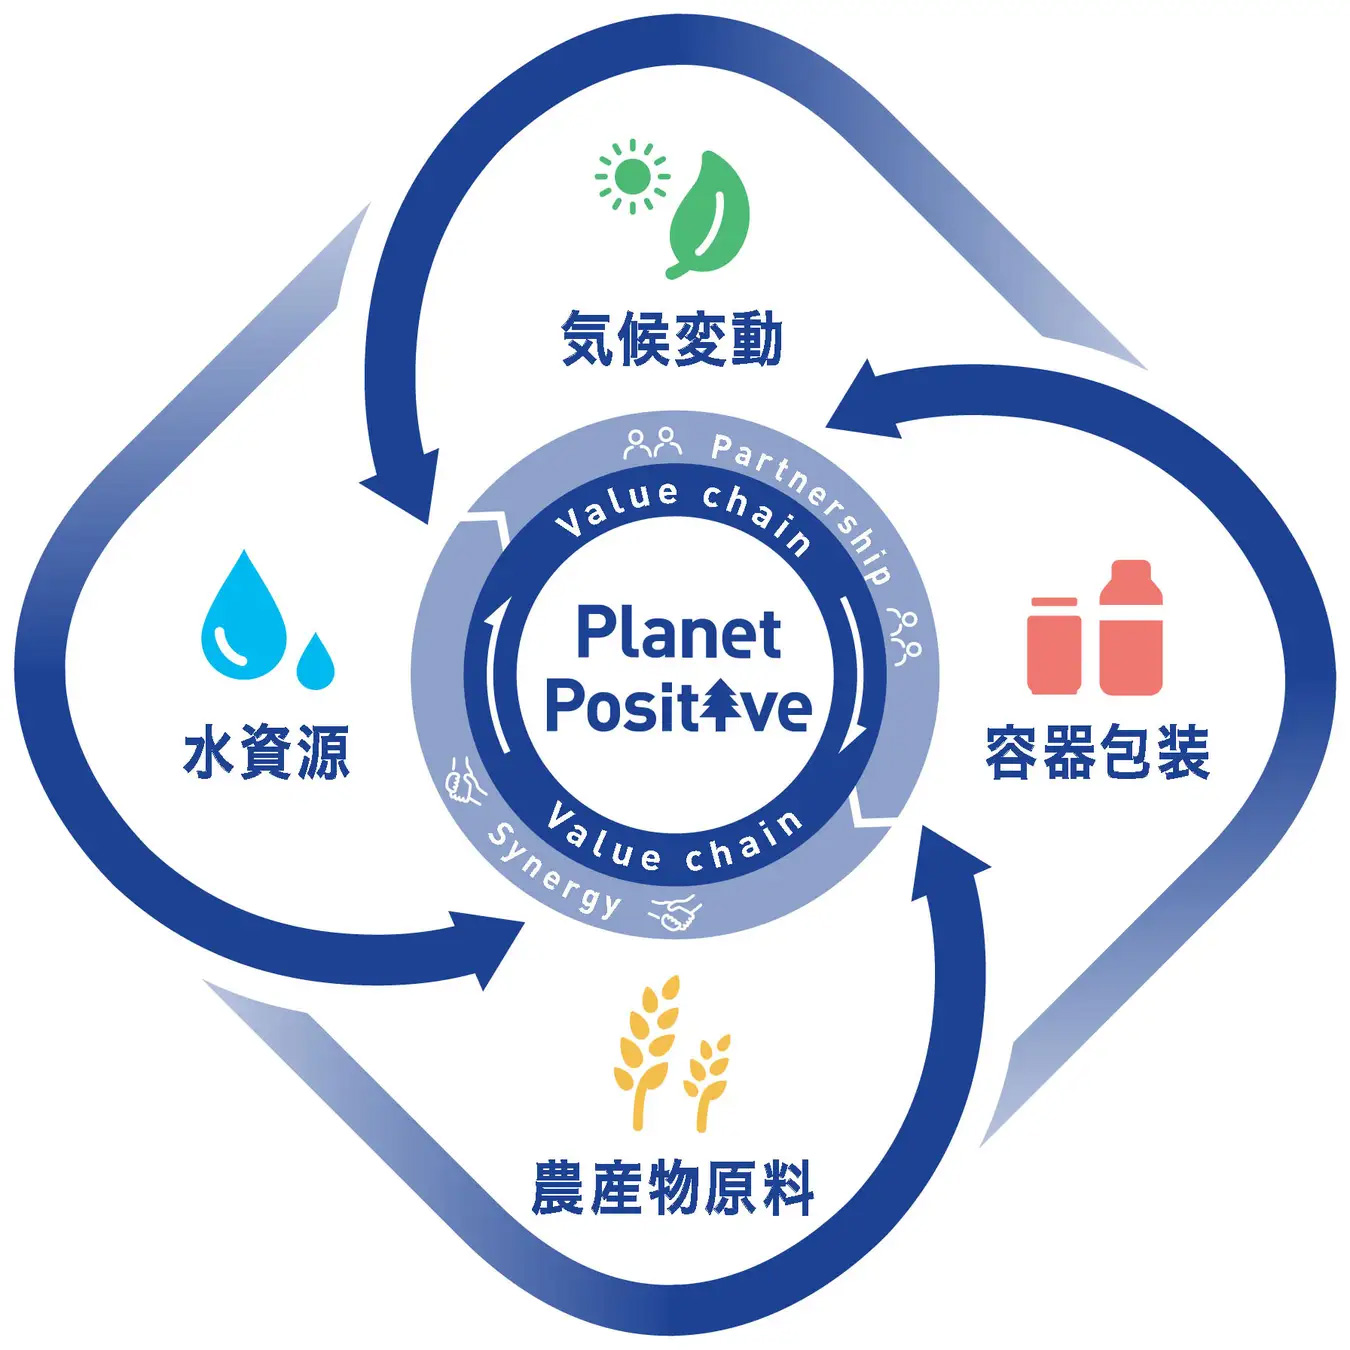 Planet Positive 気候変動 容器包装 農産物原料 水資源